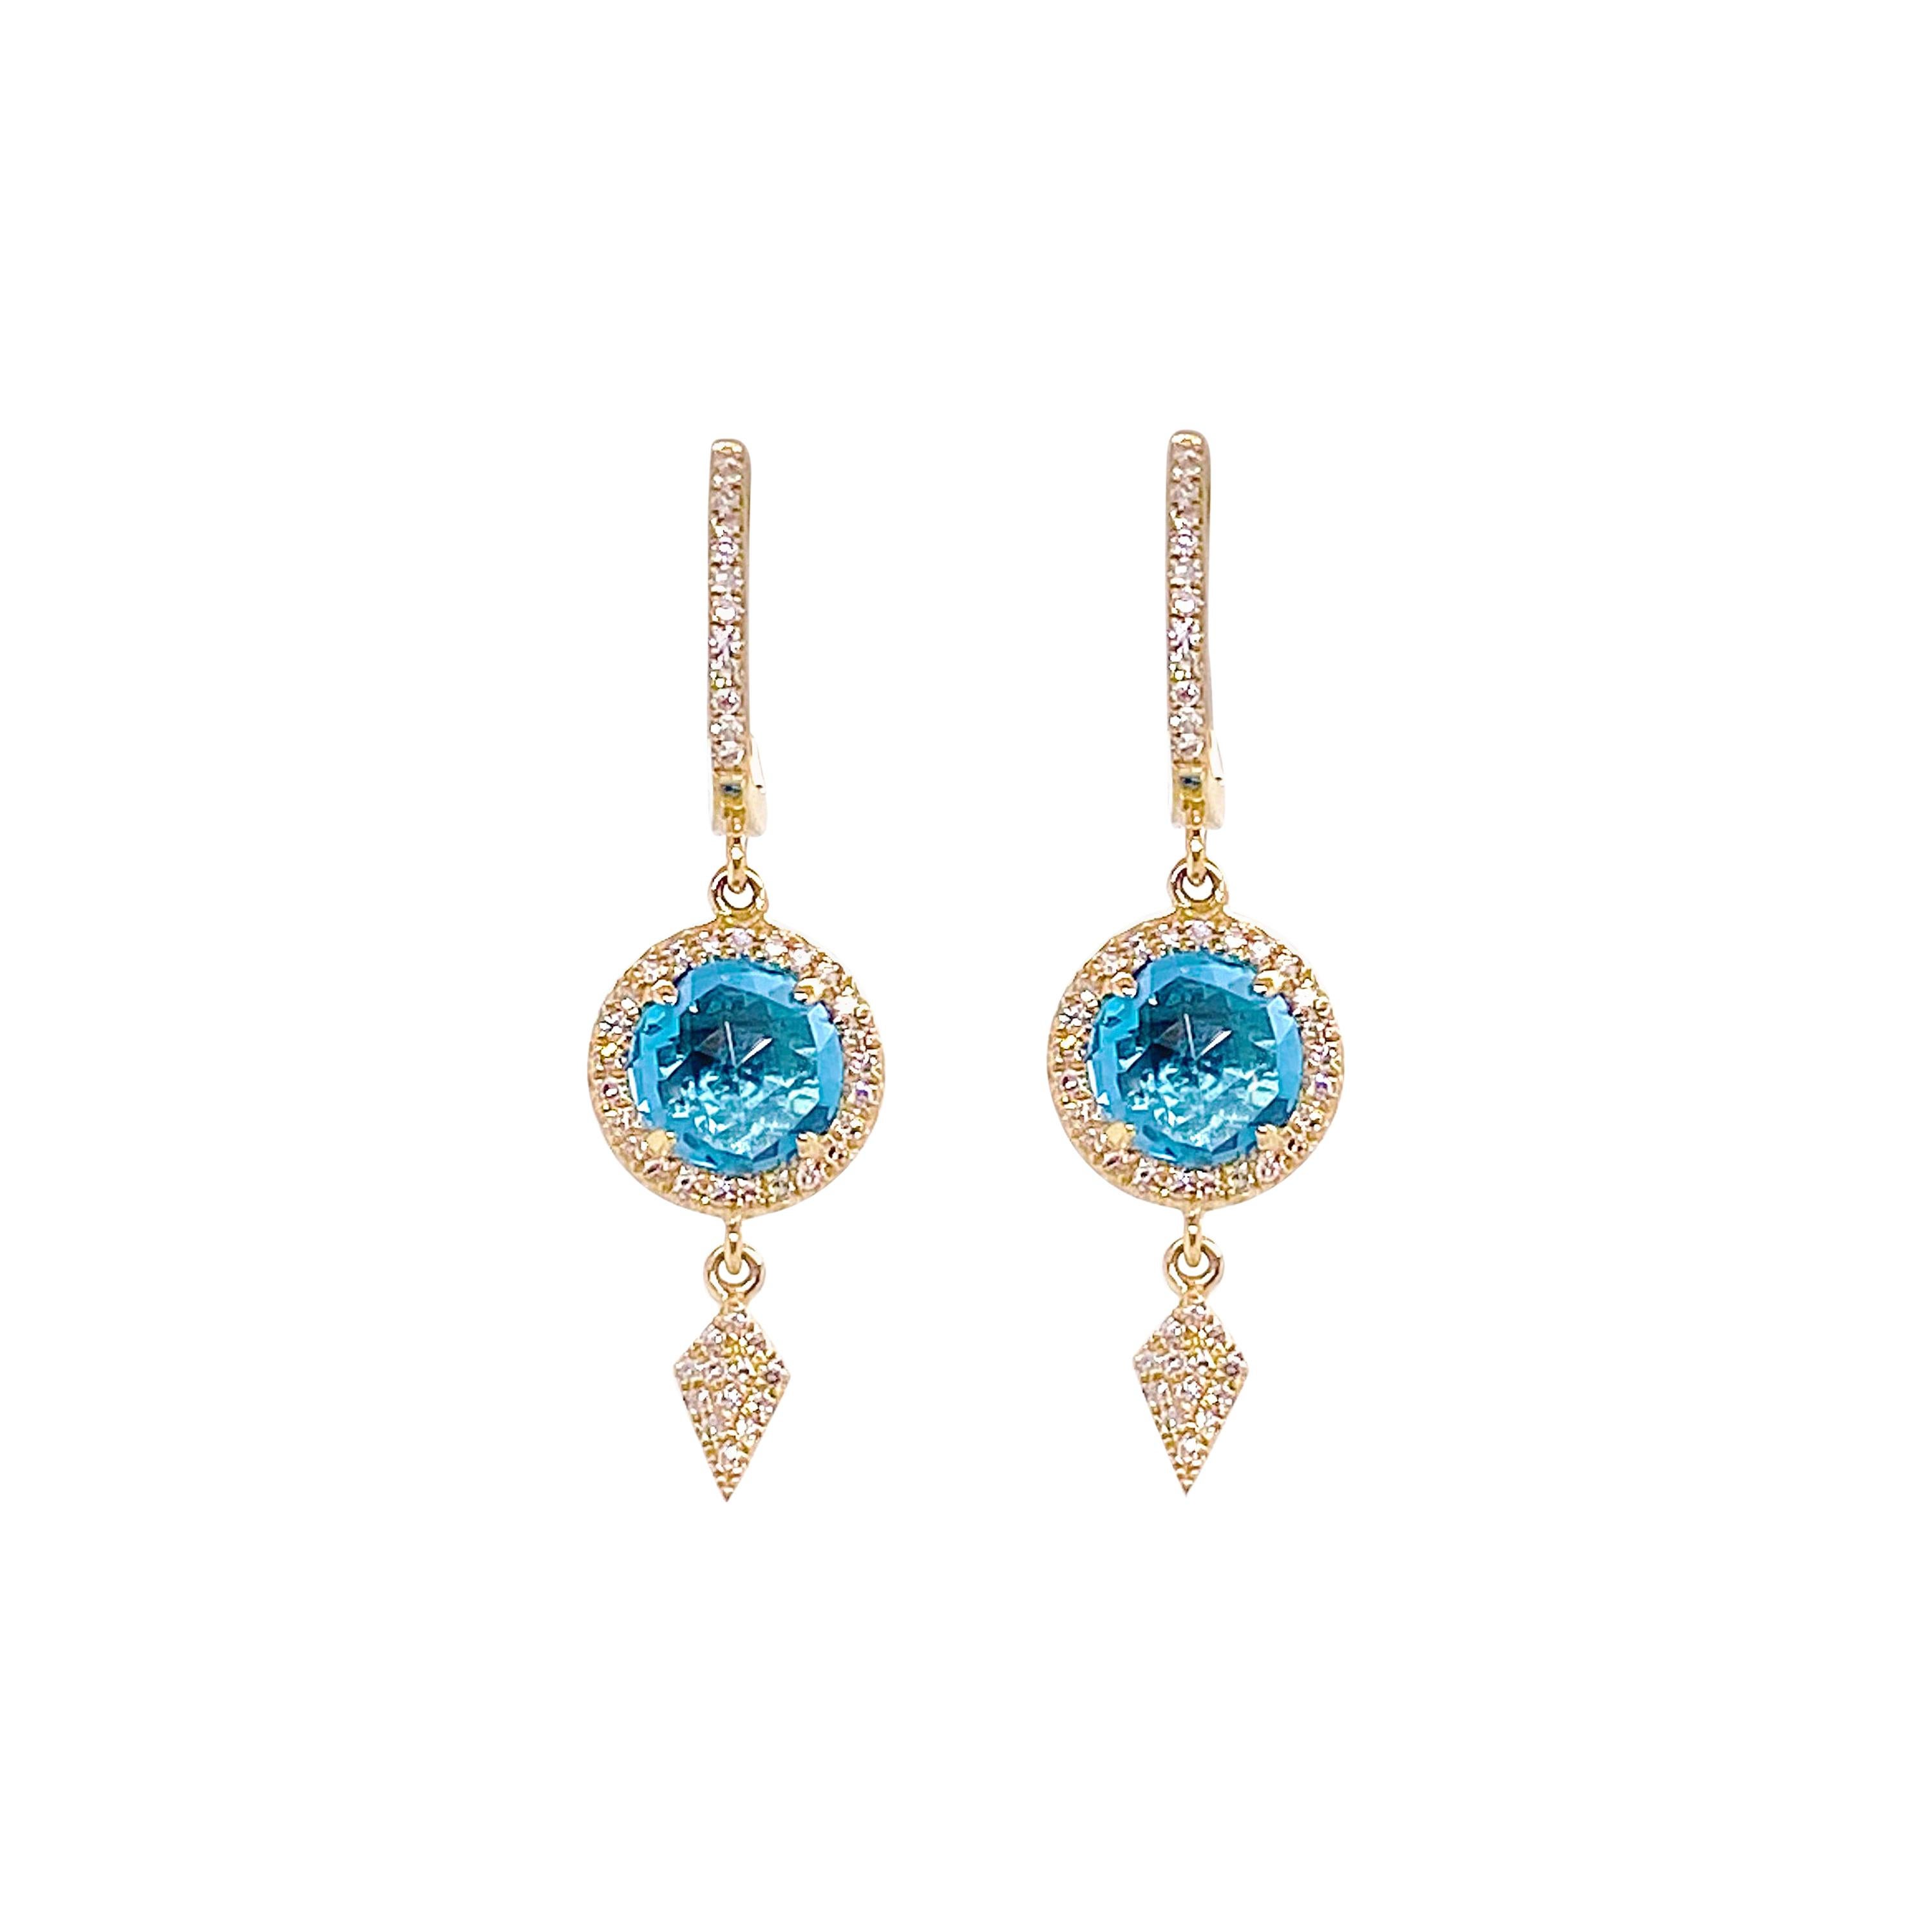 Blue Topaz and Diamond Halo Earring Drops, 2.39 Ct Topaz and 102 Diamonds